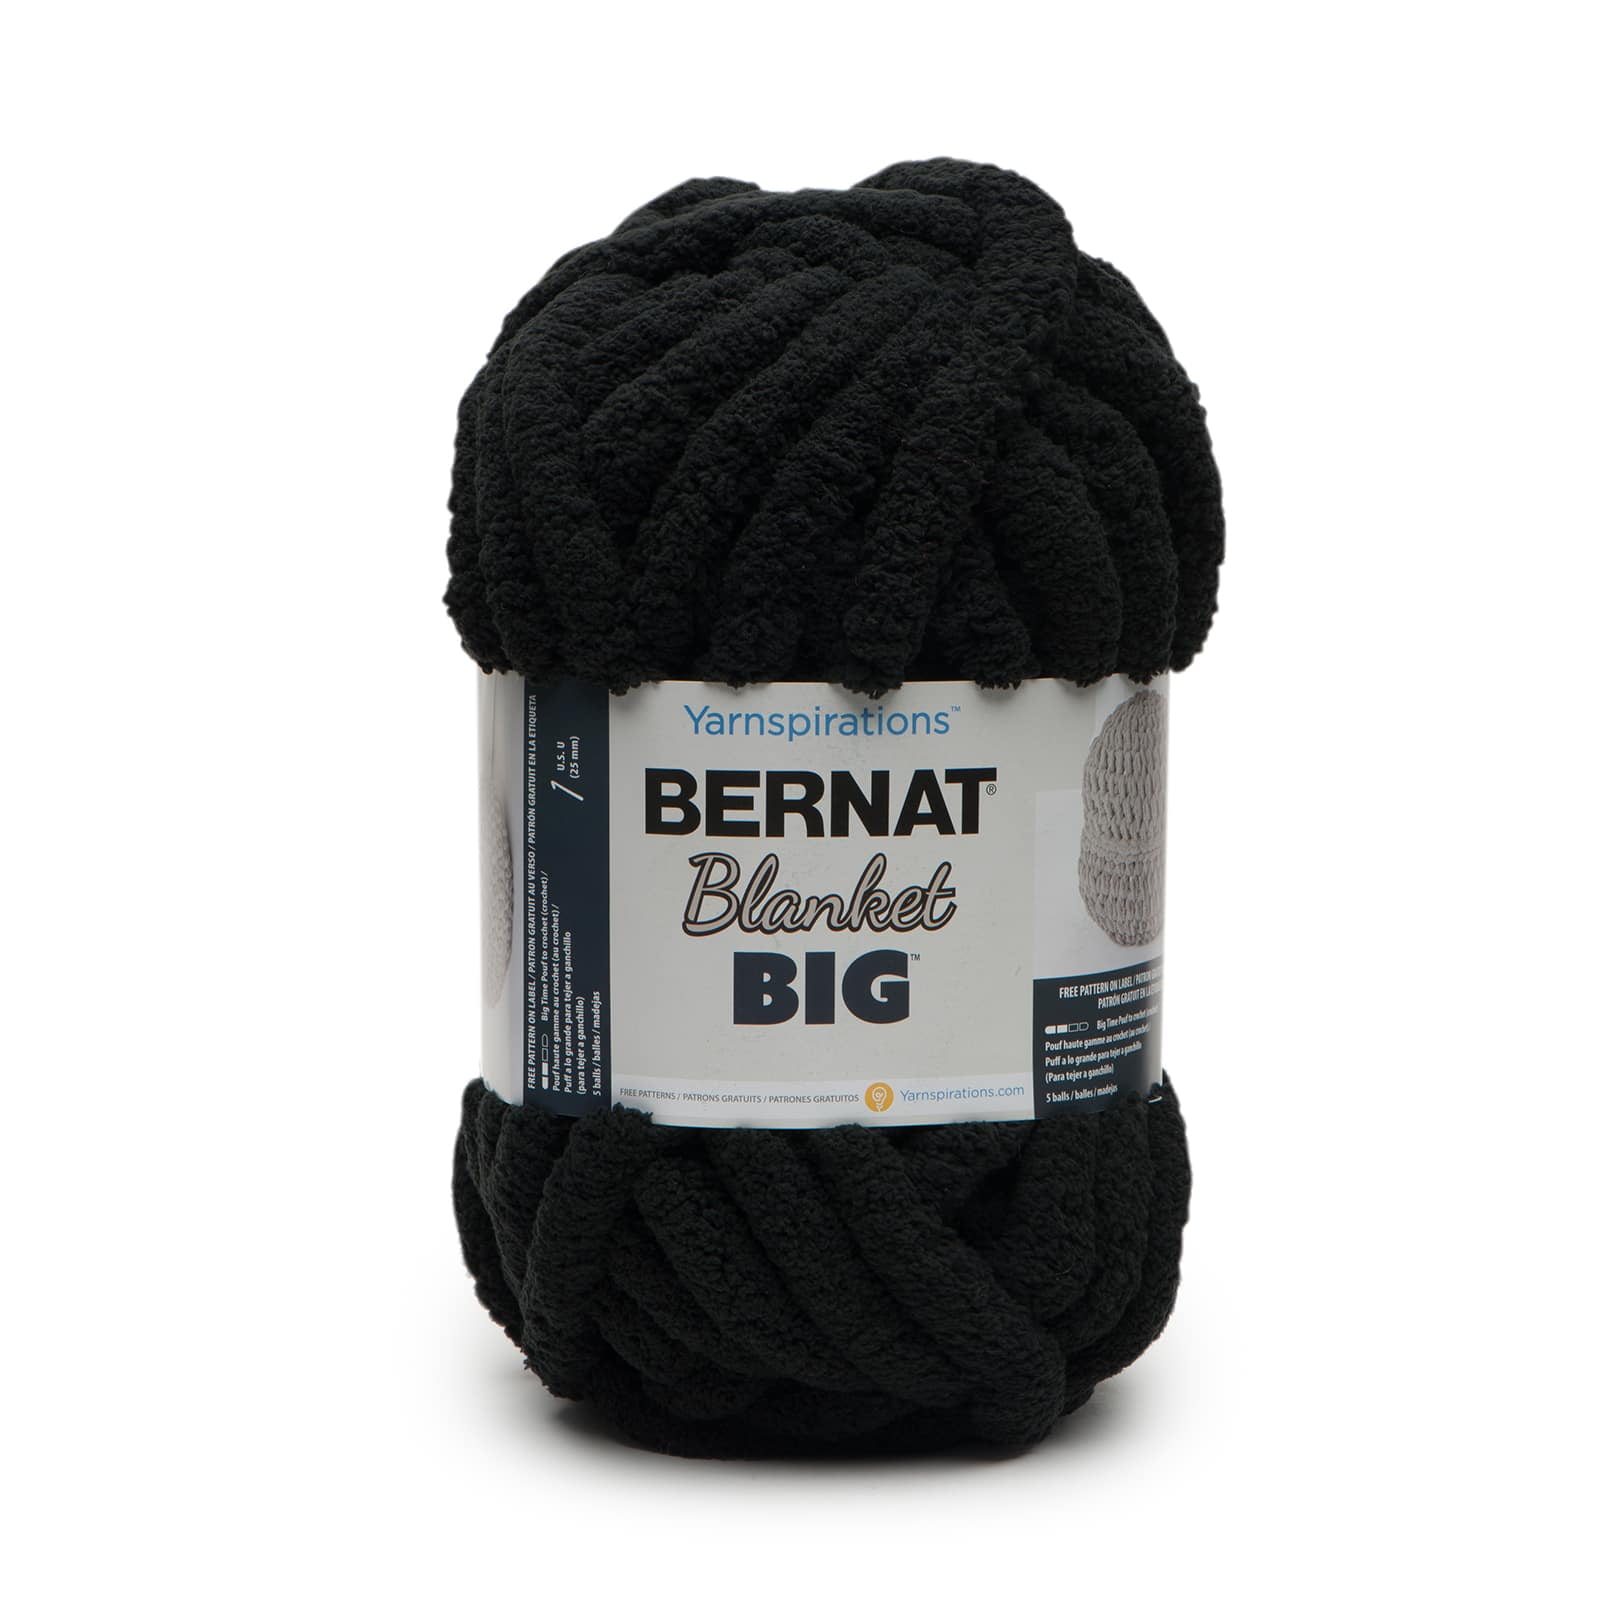 Bernat Baby Blanket Yarn 10.5oz, 12pk by Bernat